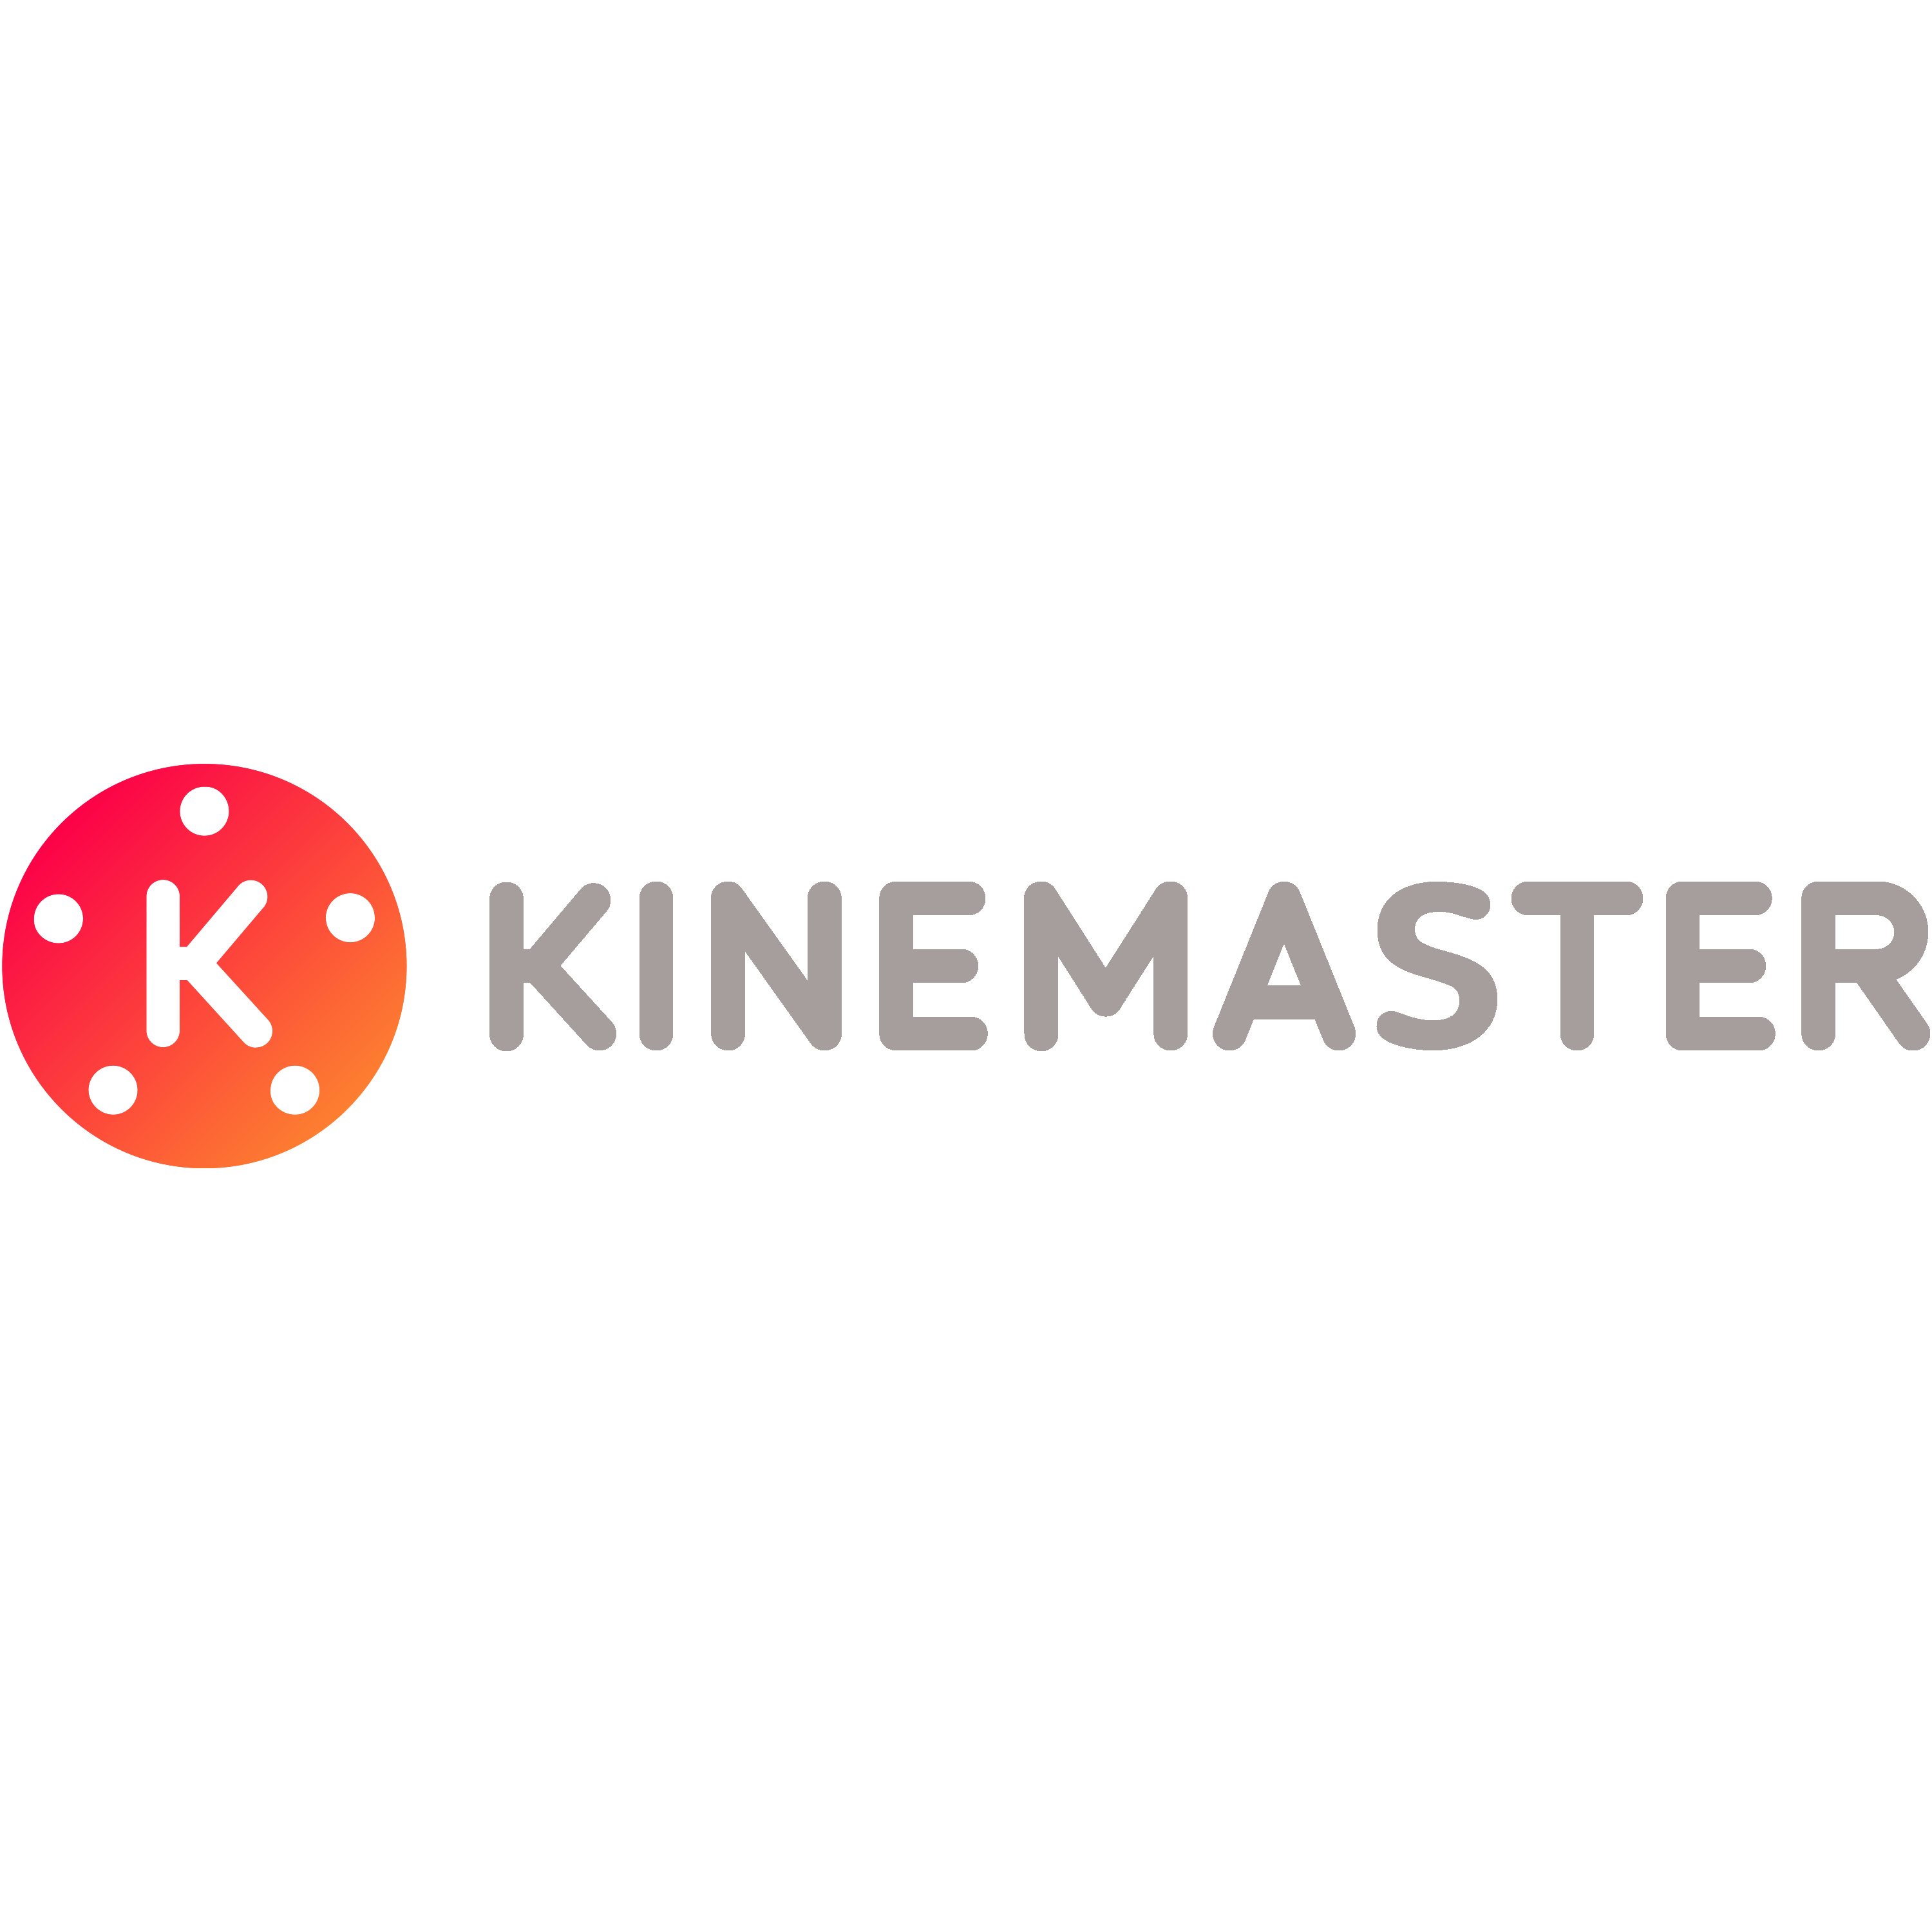 Kinemaster Logo  Transparent Gallery